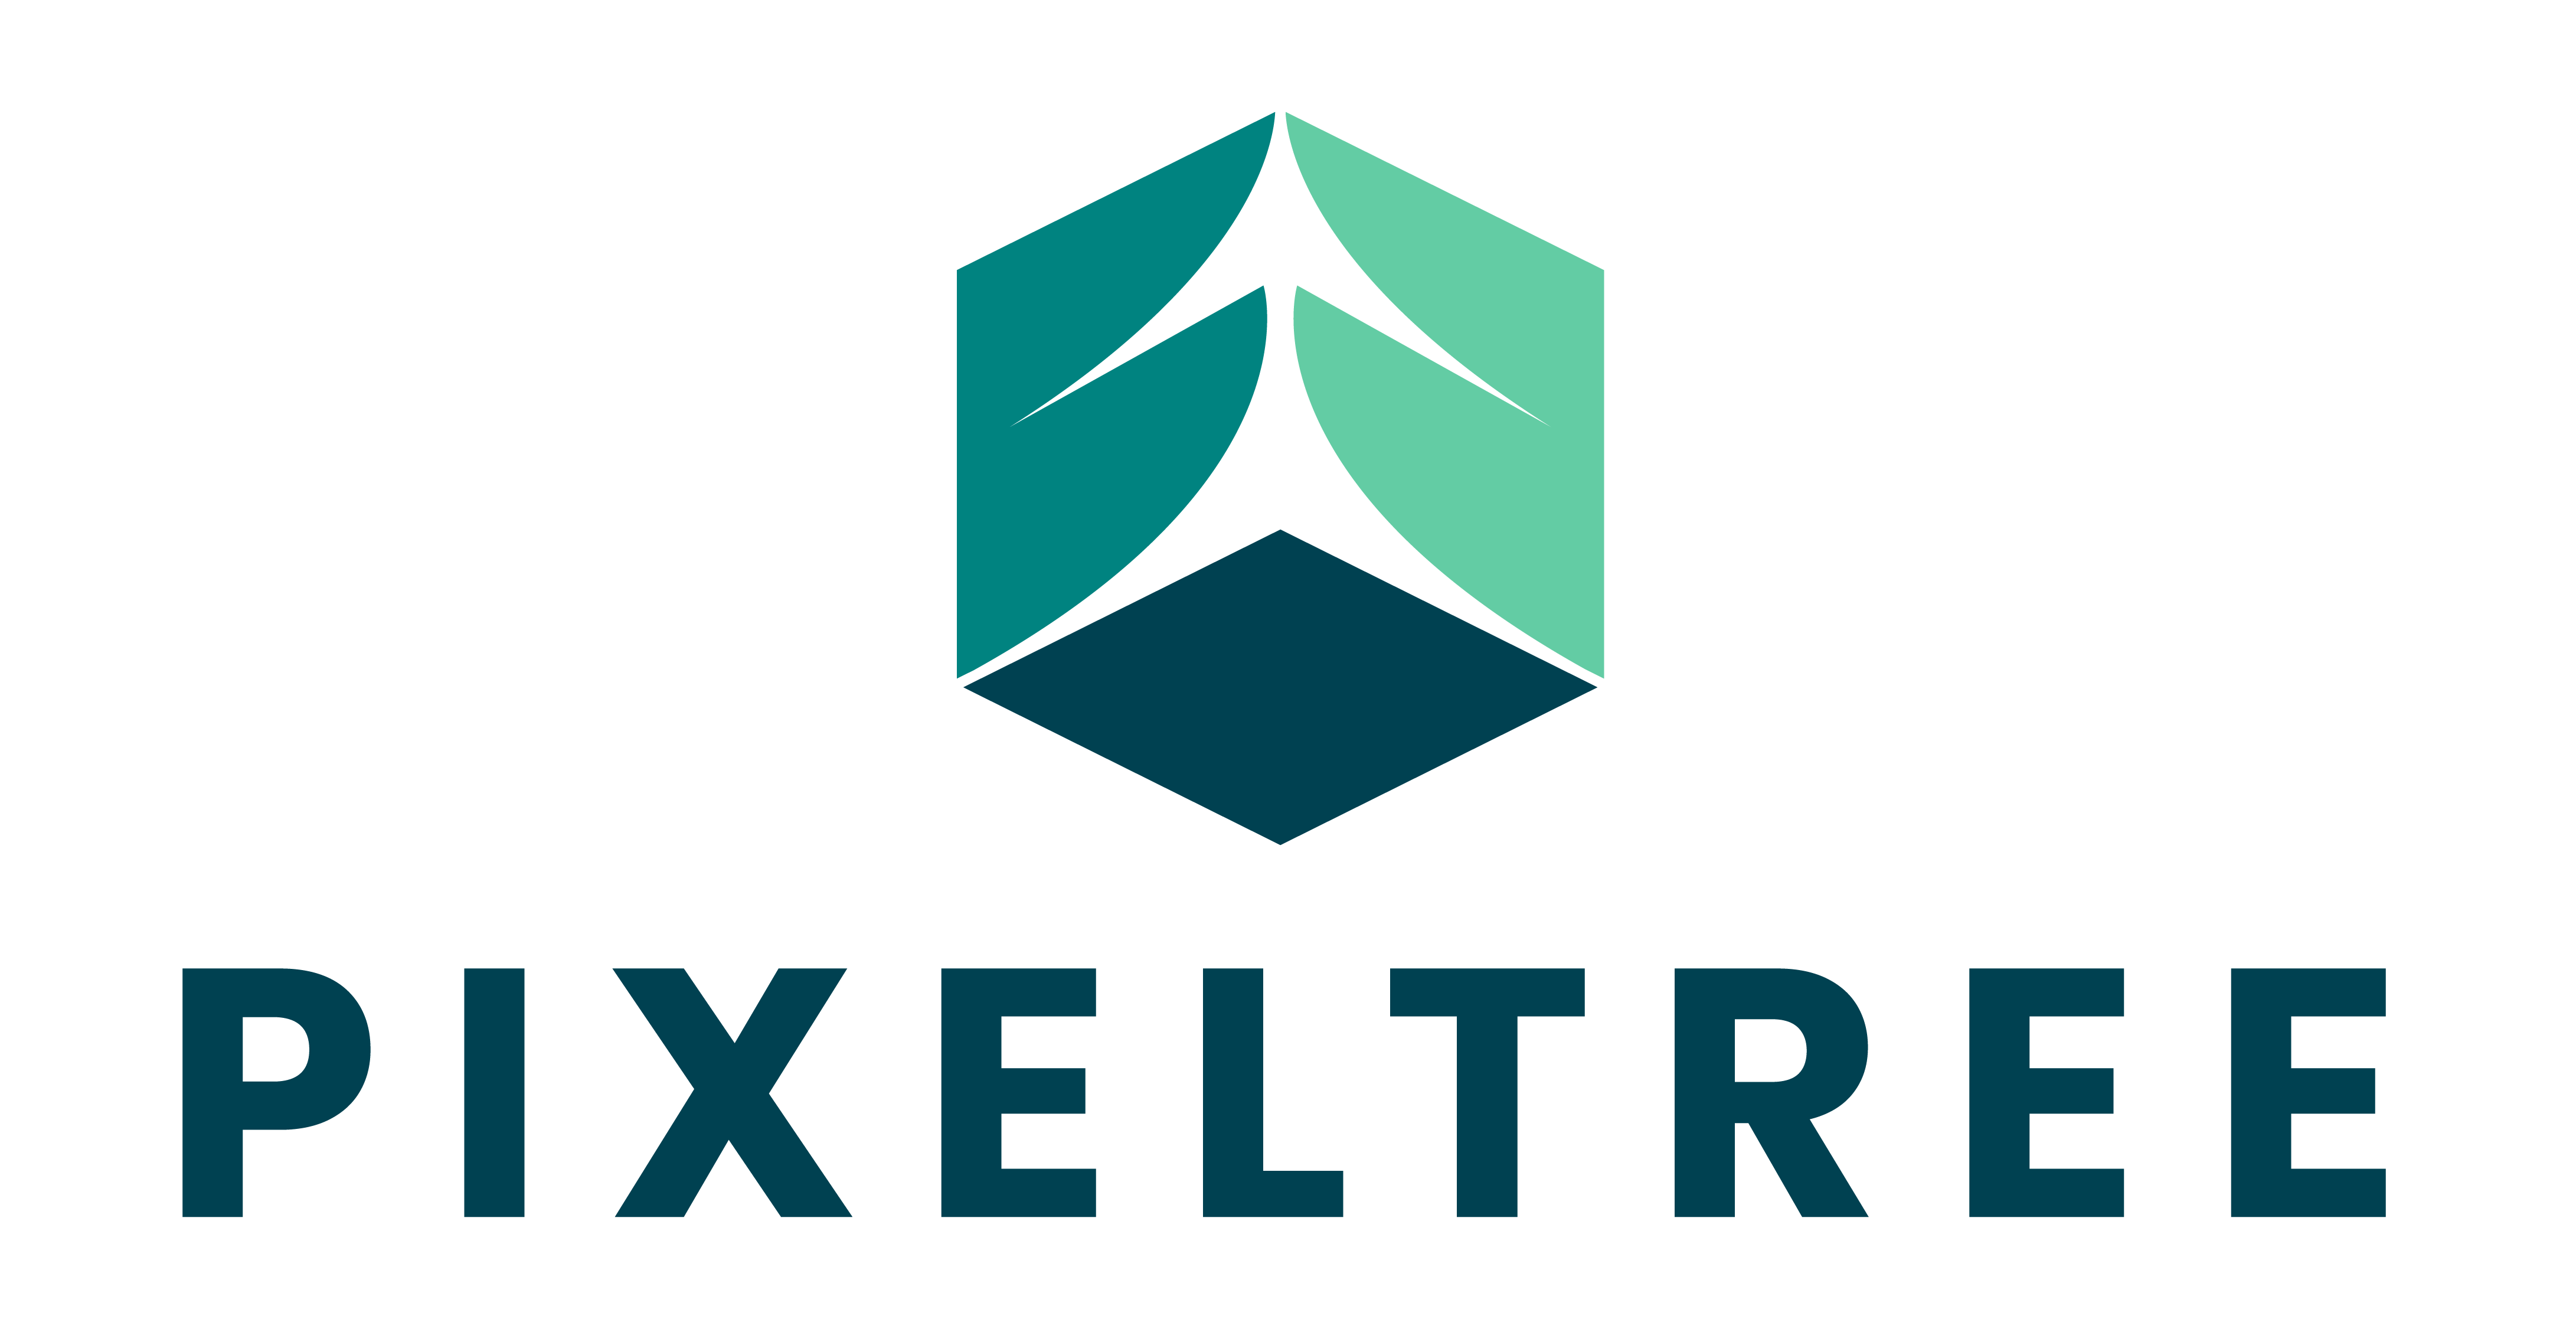 Pixeltree logo